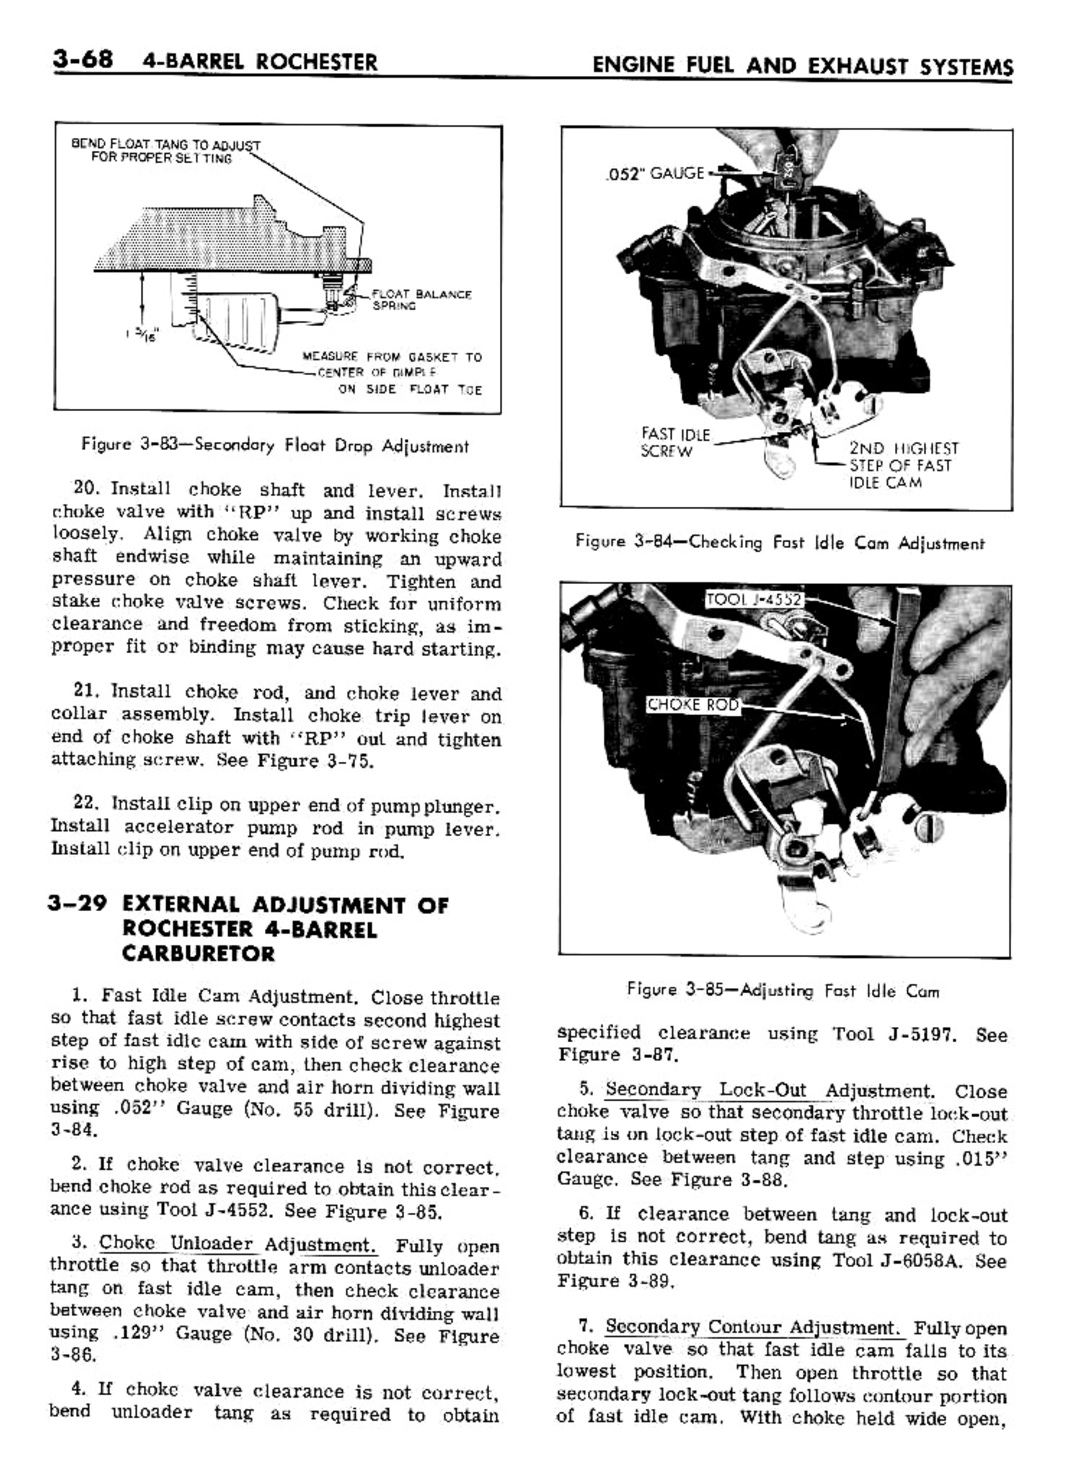 n_04 1961 Buick Shop Manual - Engine Fuel & Exhaust-068-068.jpg